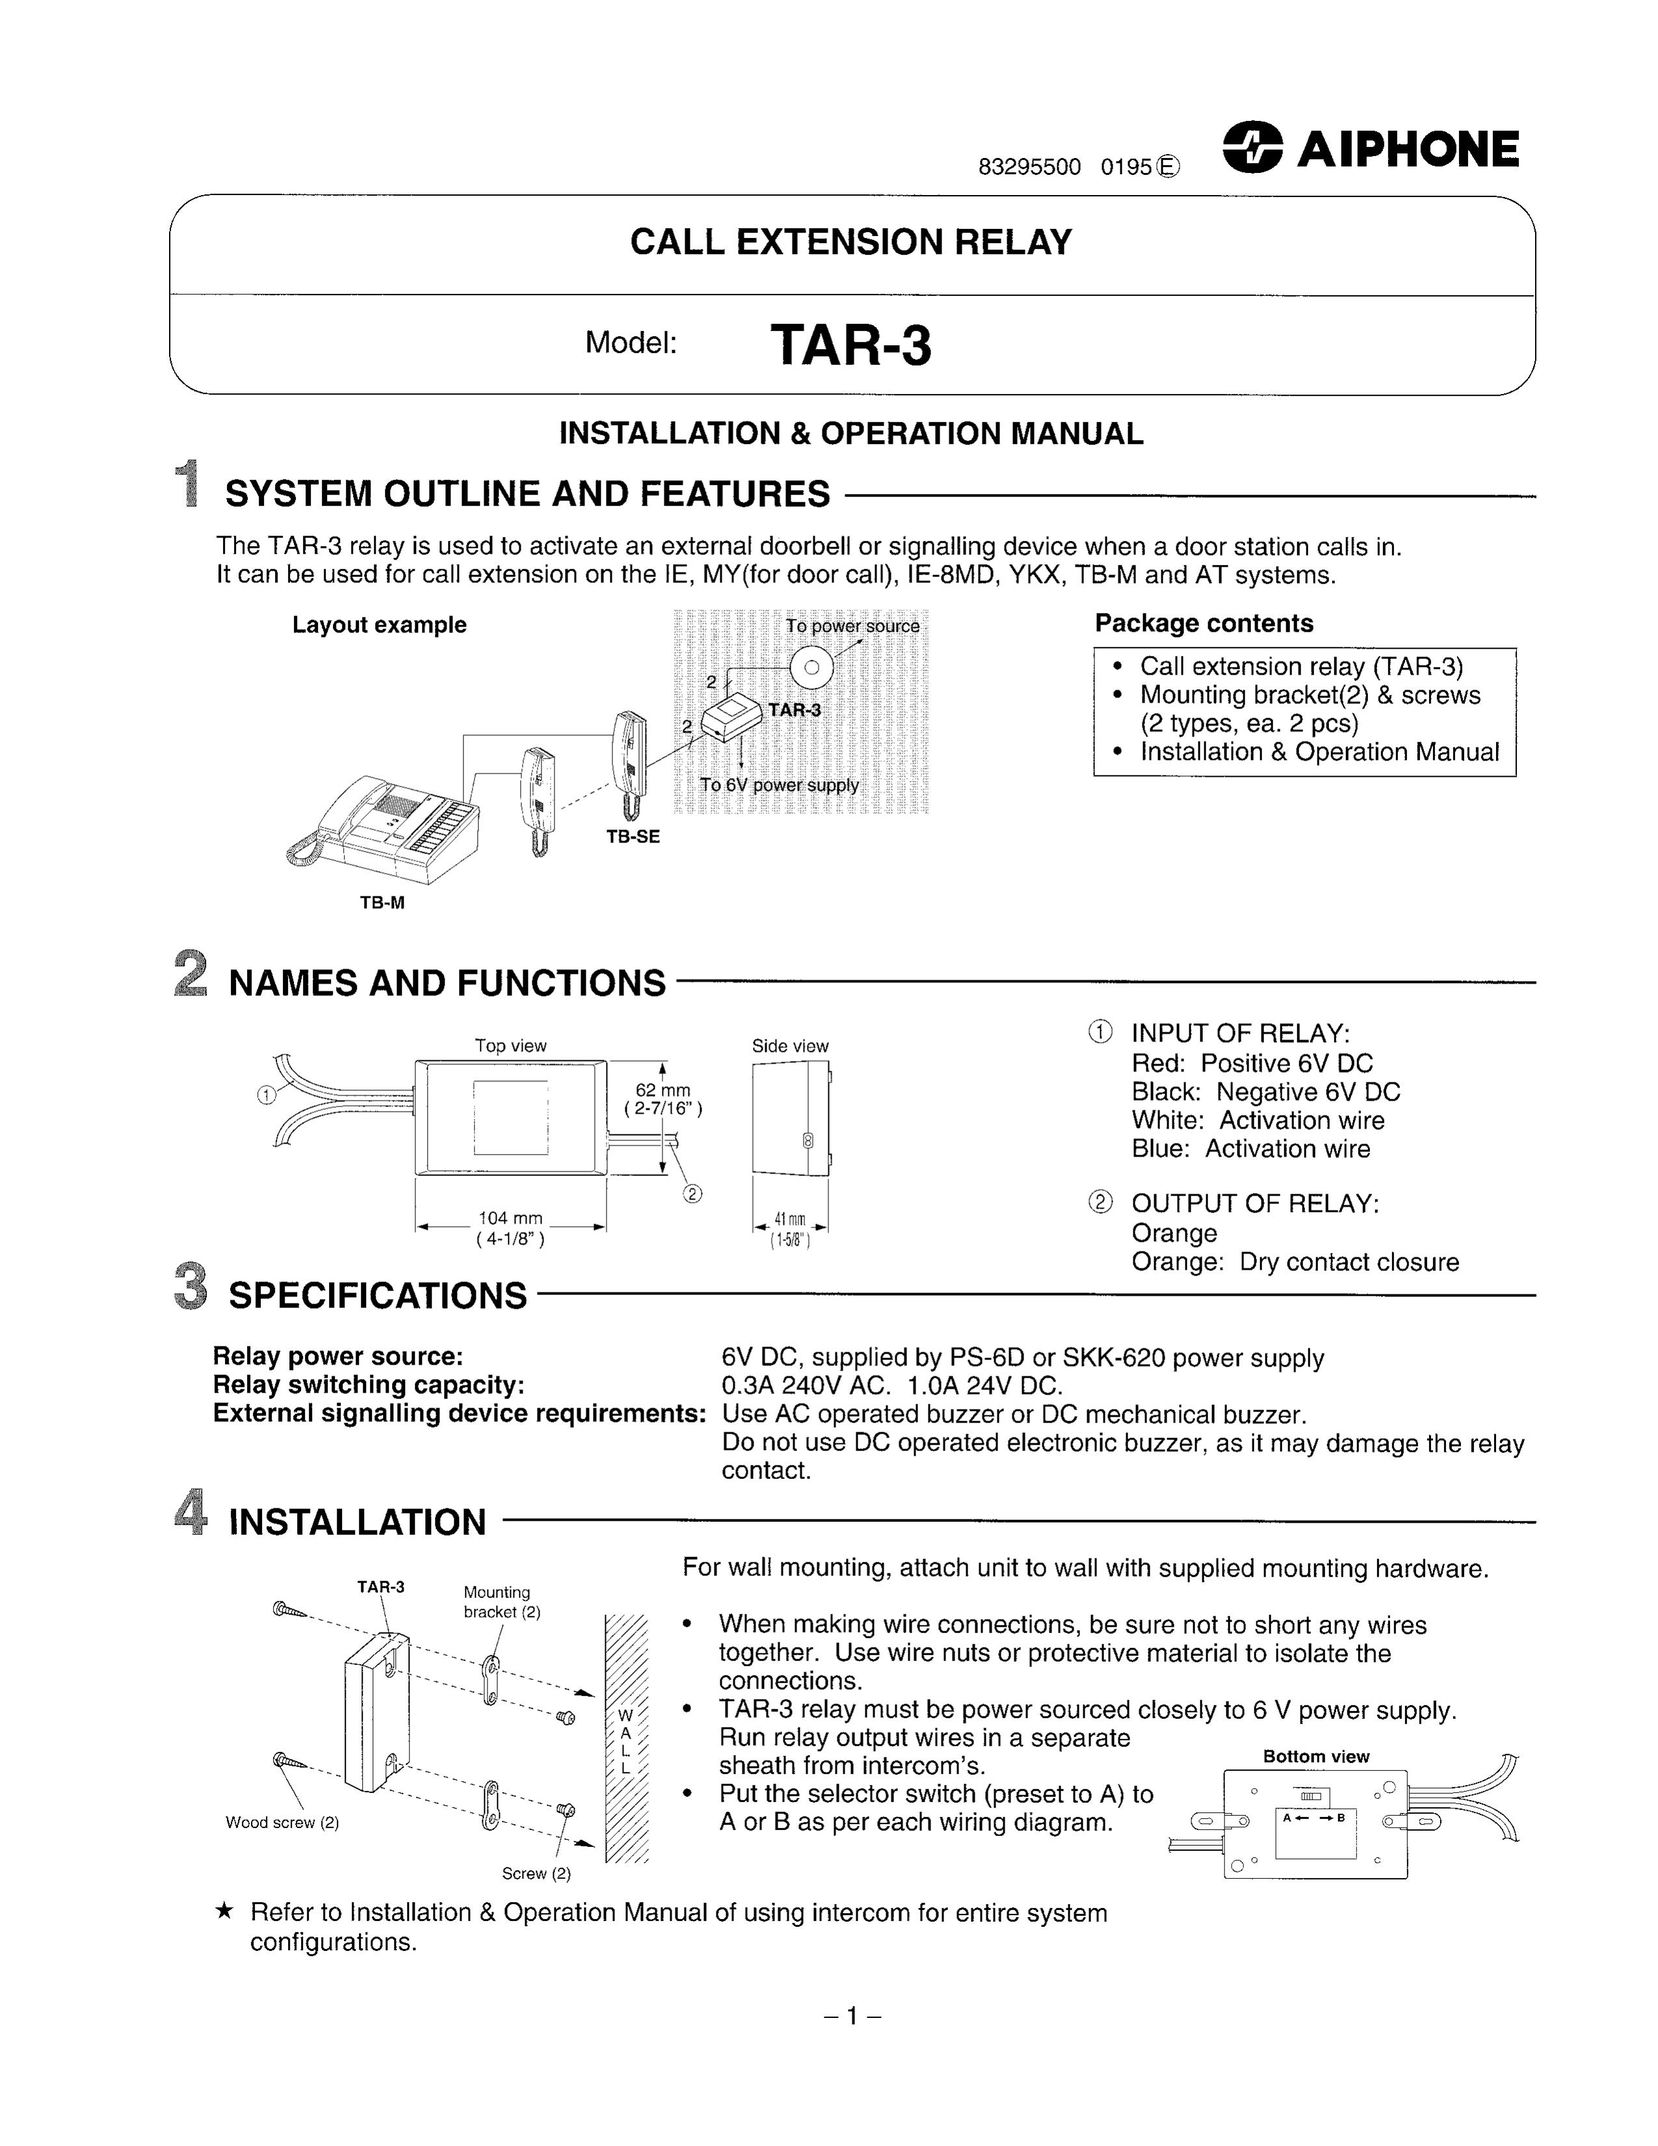 Aiphone TAR-3 Telephone User Manual